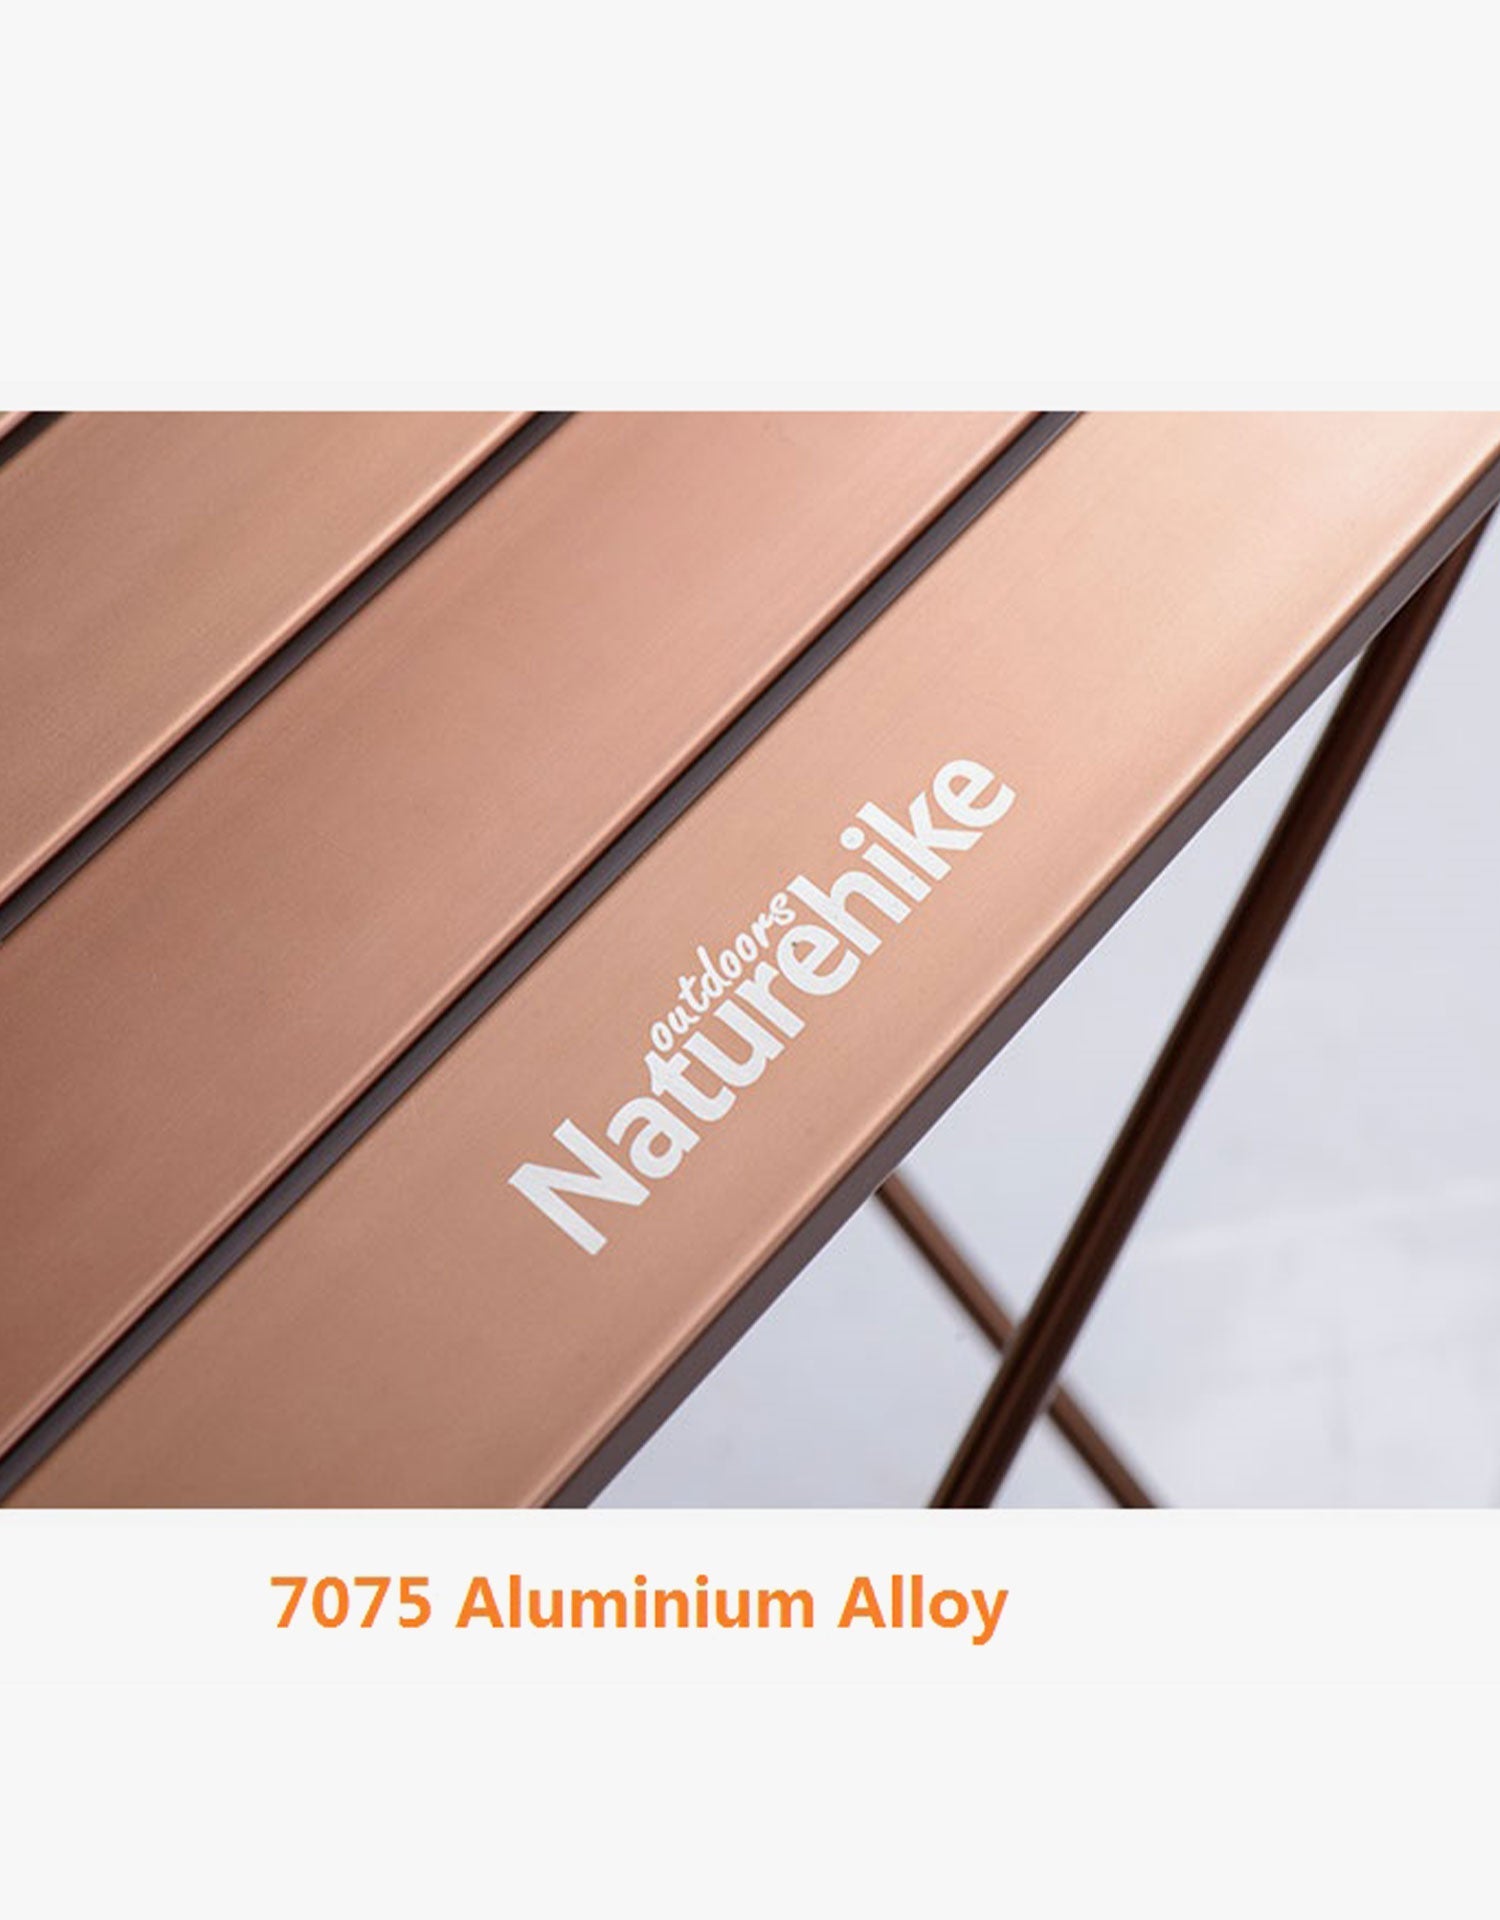 Naturehike Outdoor Aluminum Folding Table NH16Z016